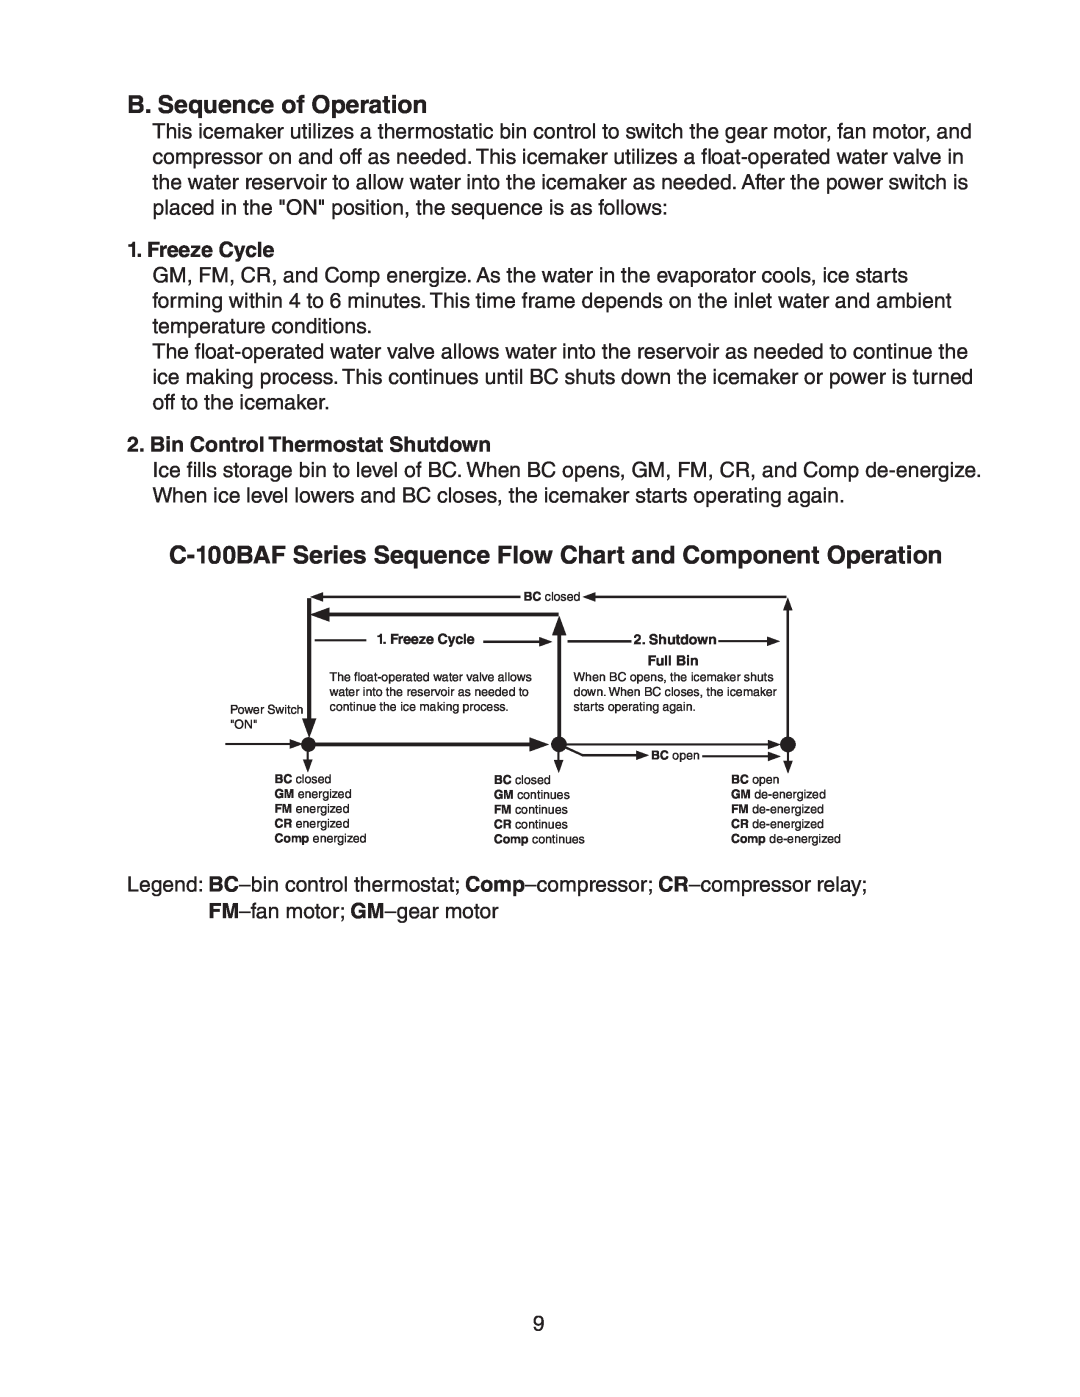 Hoshizaki C-100BAF-ADDS service manual B. Sequence of Operation, Freeze Cycle, Bin Control Thermostat Shutdown 